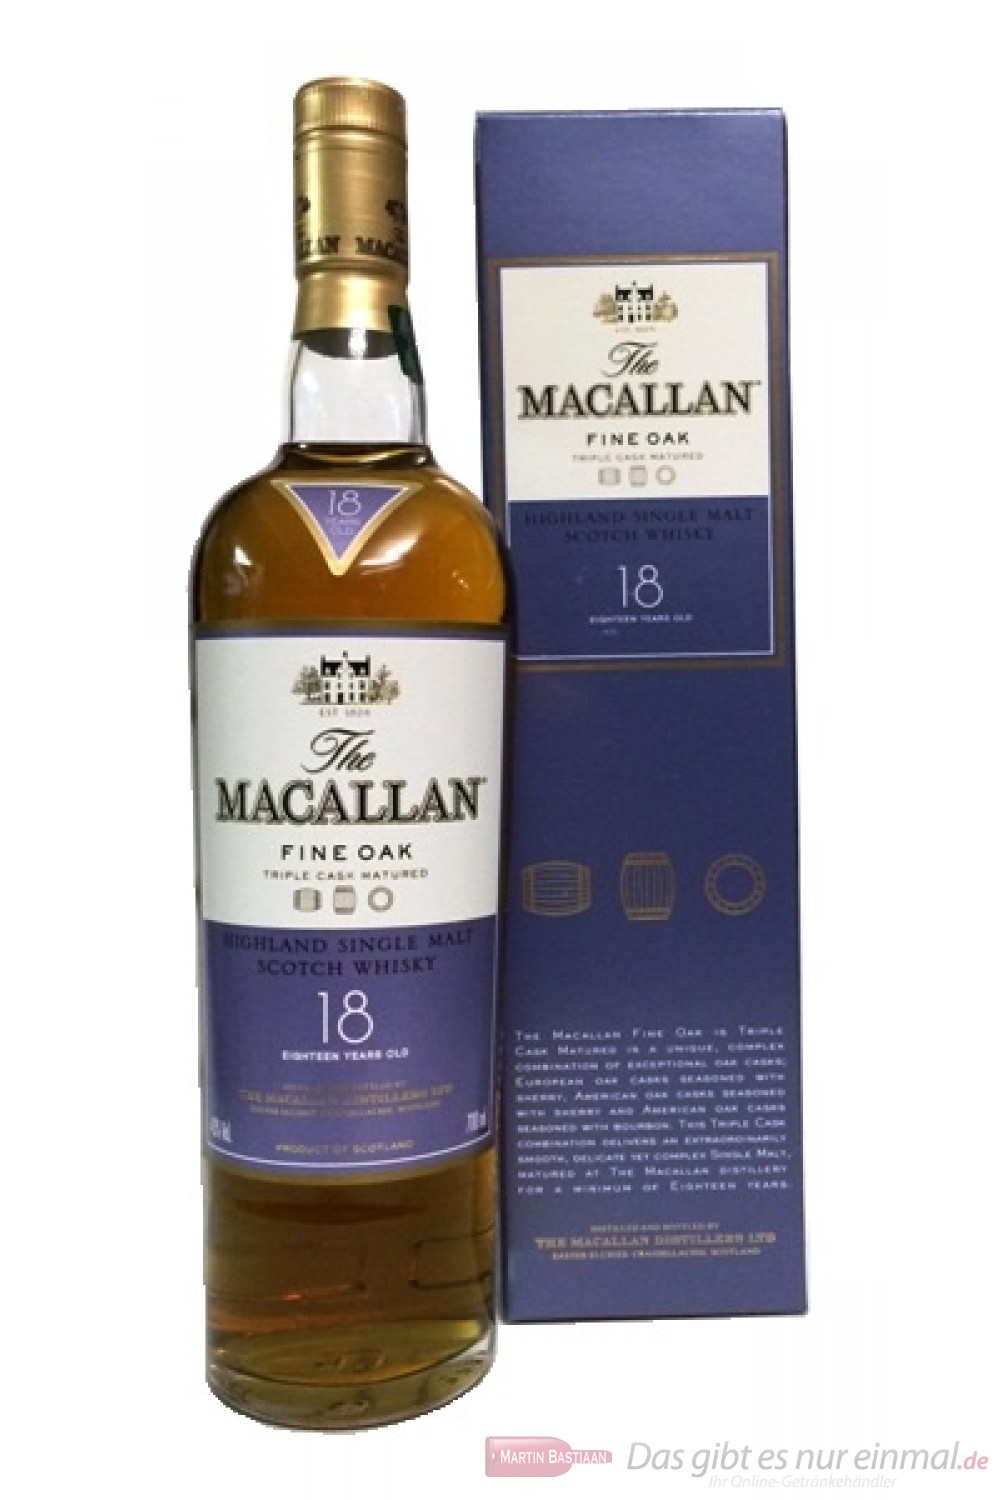 The Macallan Fine Oak 18 years